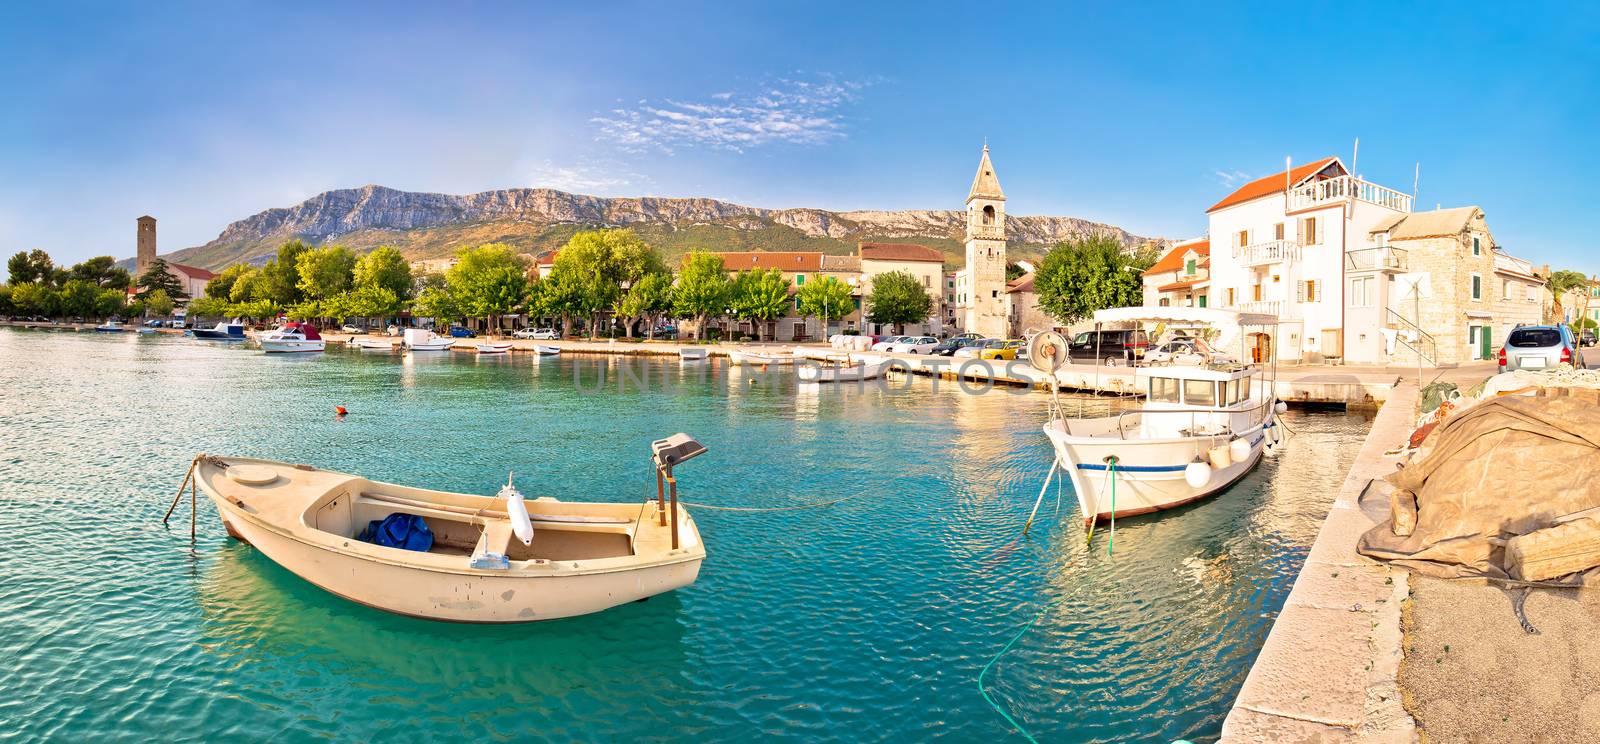 Kastel Sucurac historic waterfront panoramic view, Split region of Dalmatia, Croatia